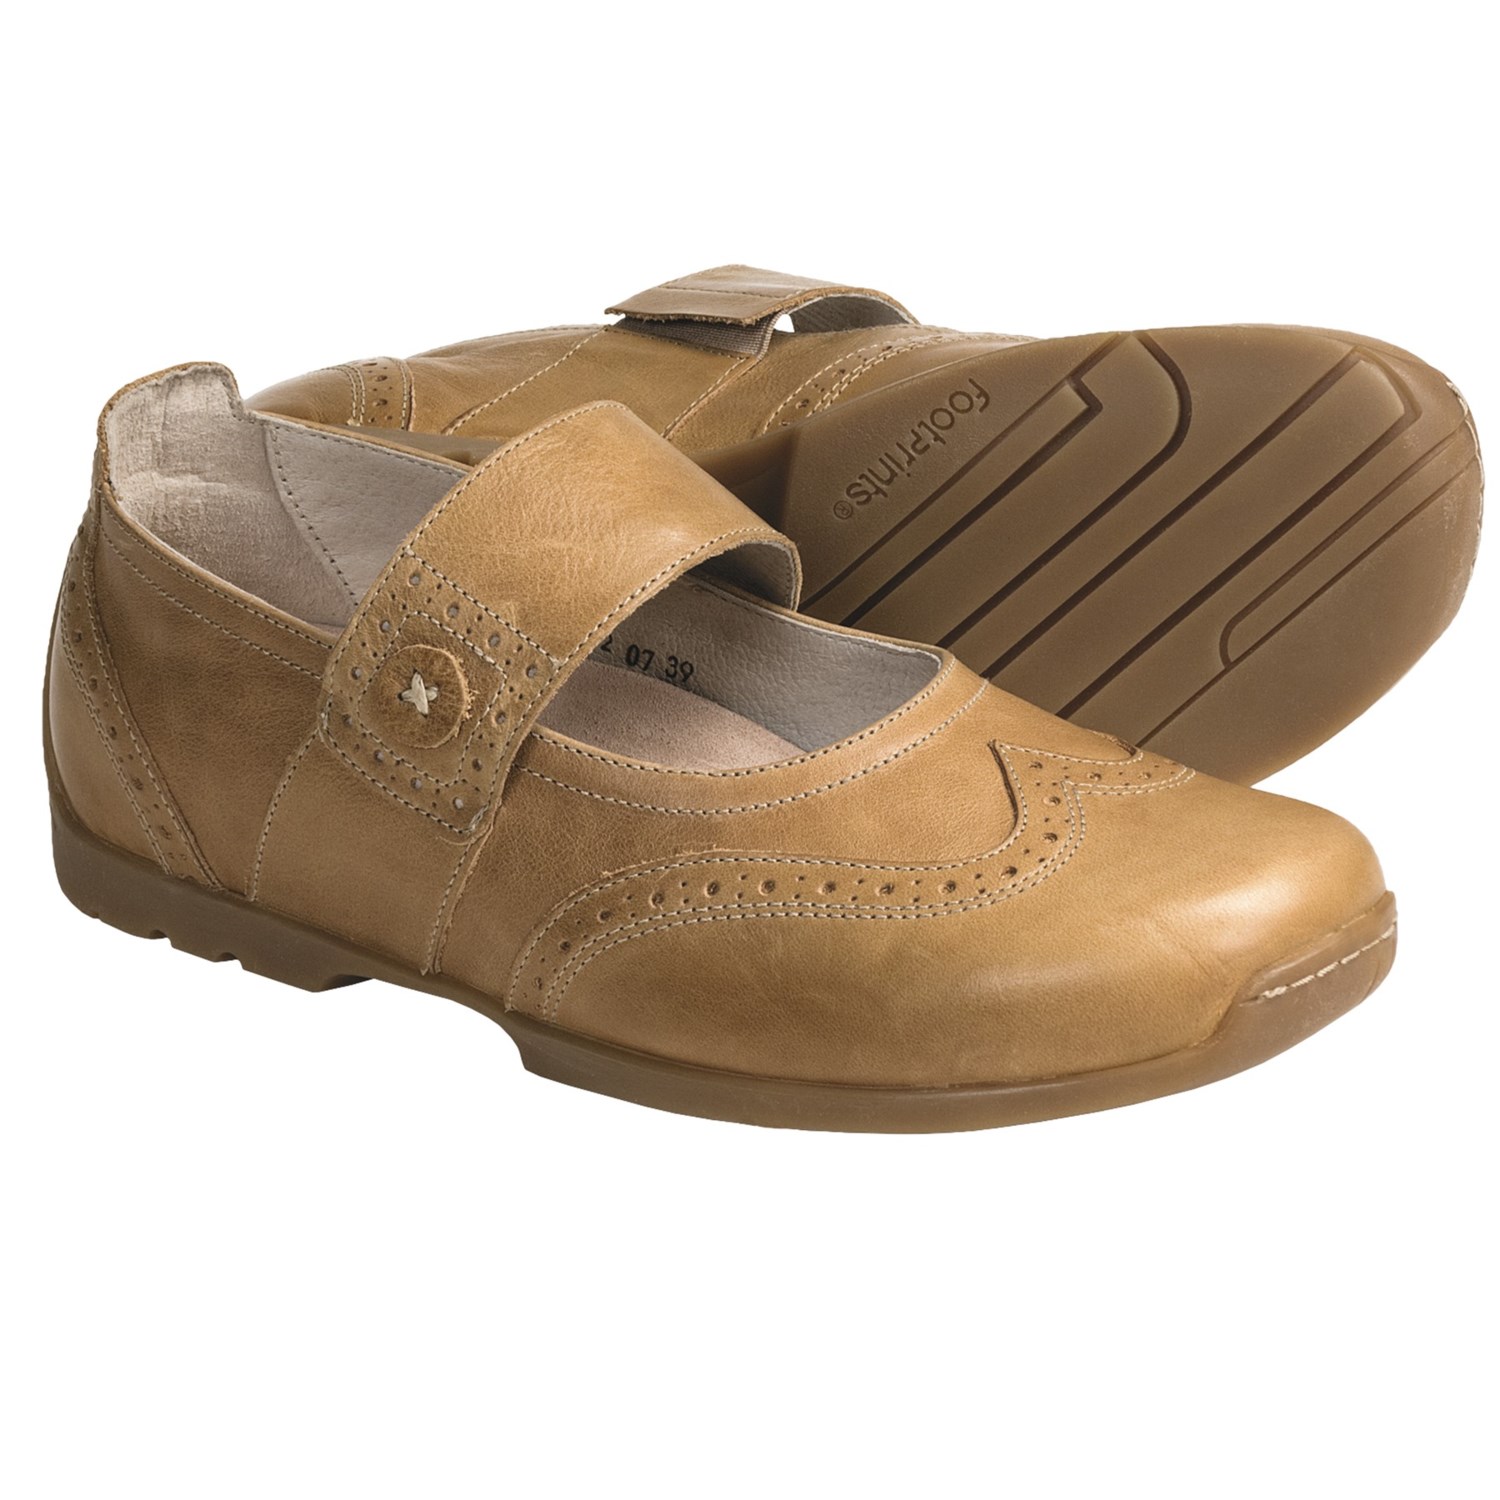 ... comfootprints-by-birkenstock-elmira-shoes-leather-for-women~p~3188c